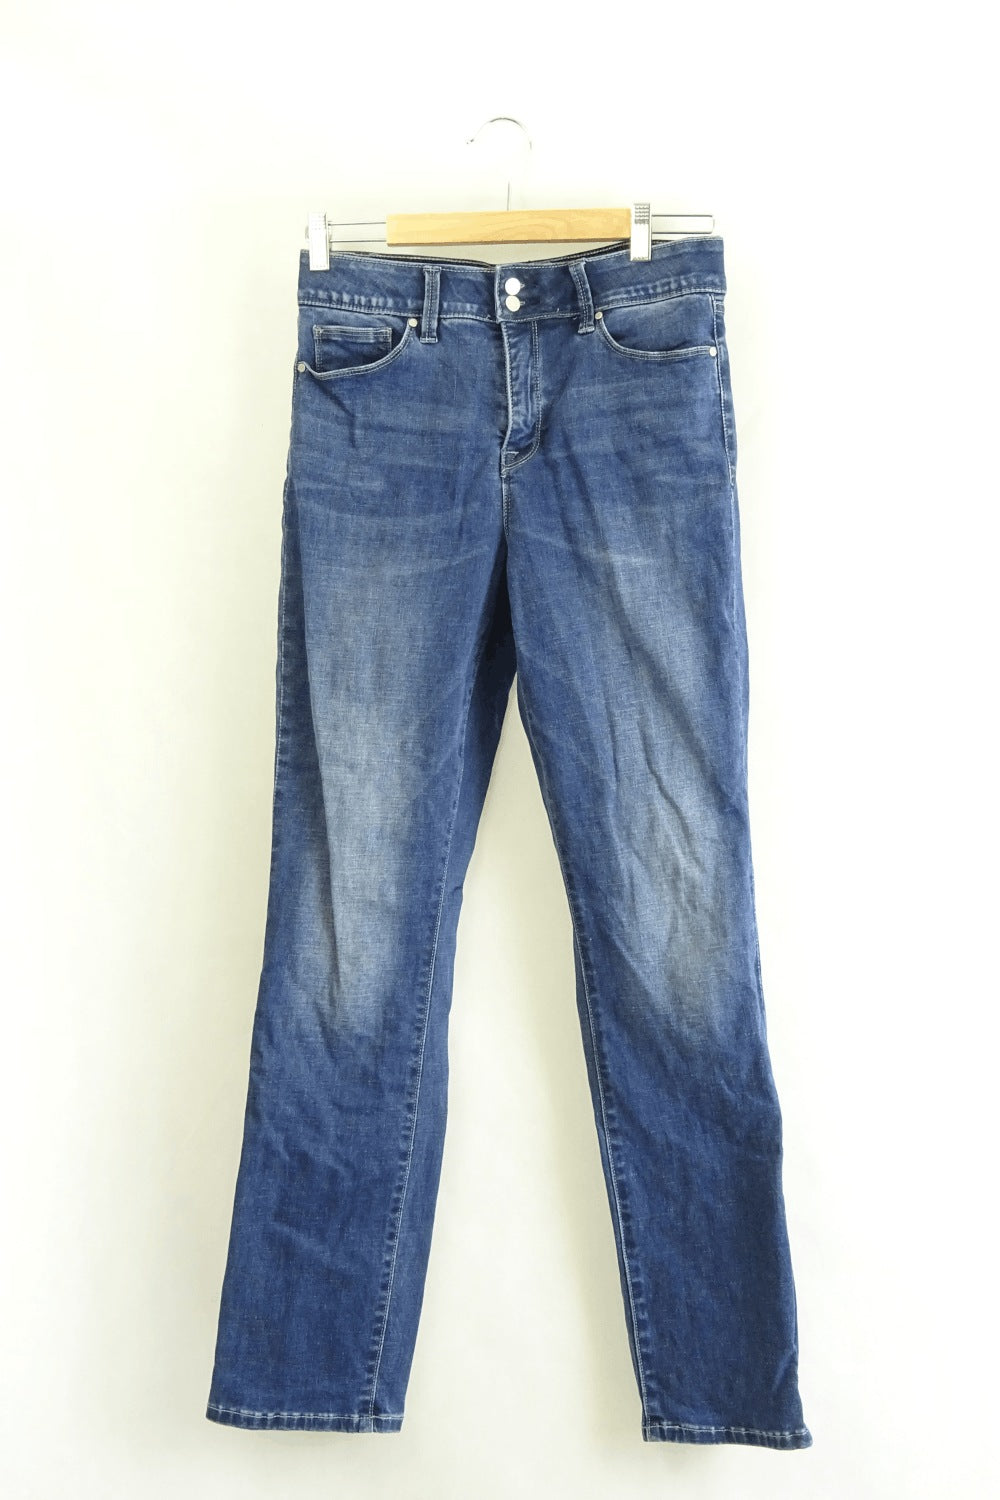 Jeanswest Blue Jeans 11